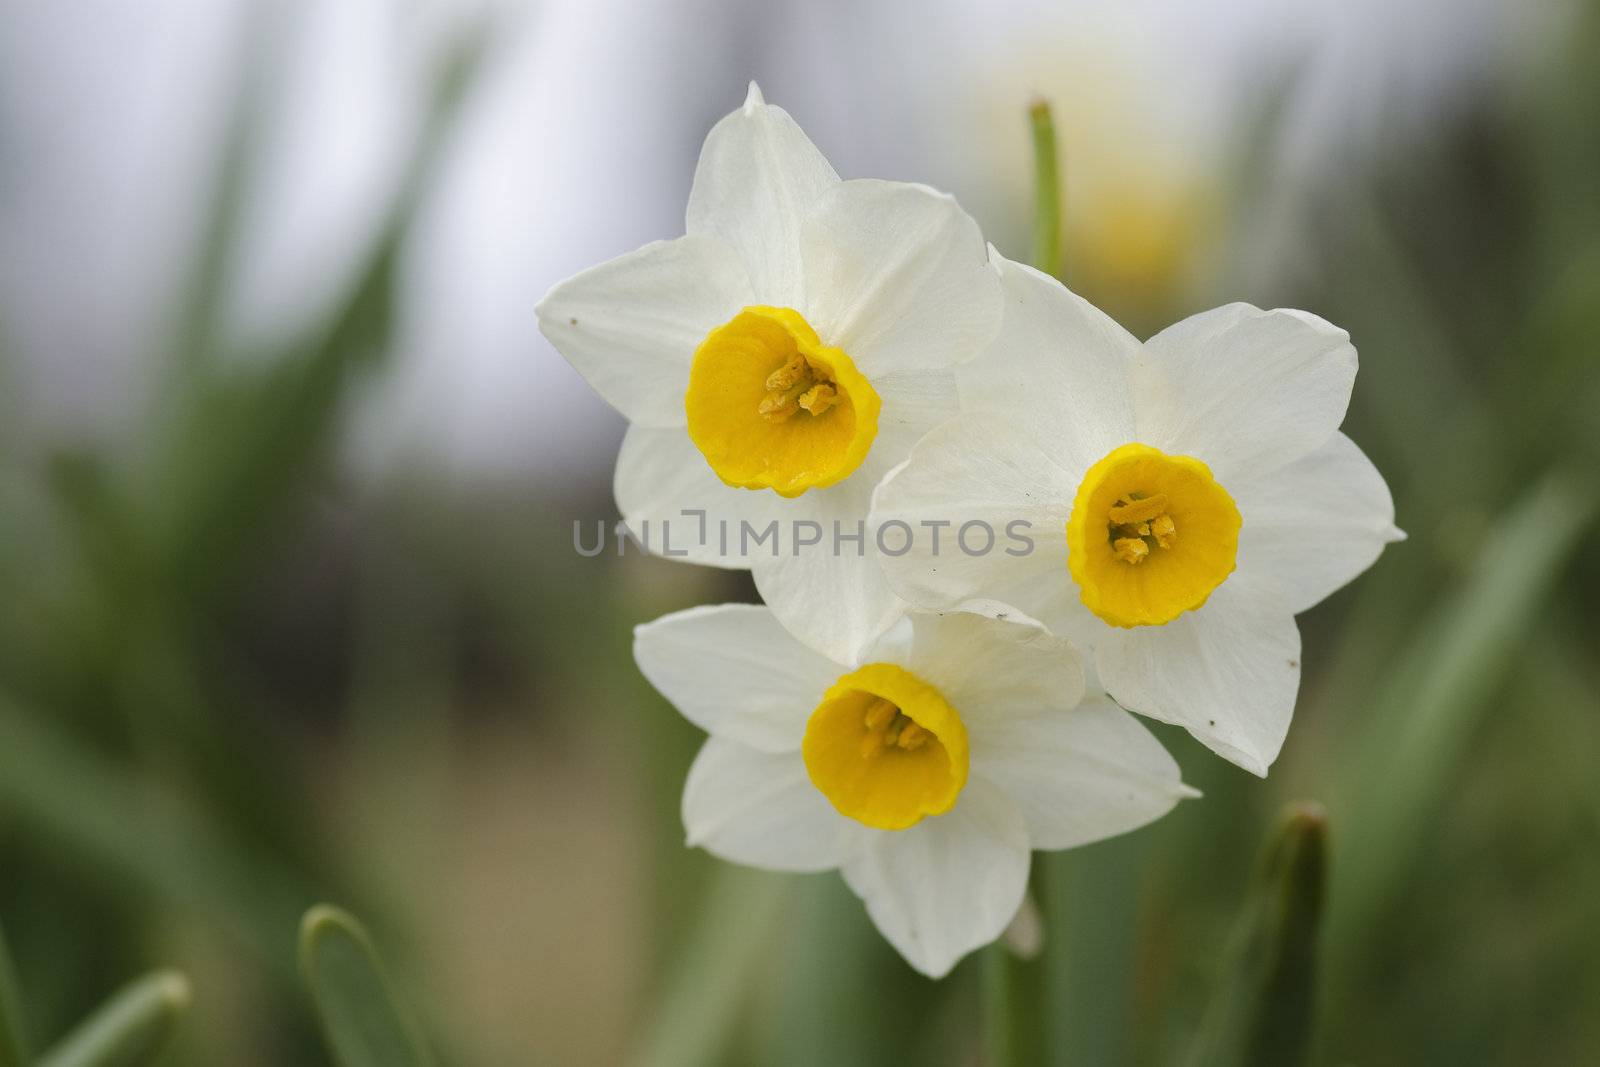 Daffodil flowers by Arrxxx